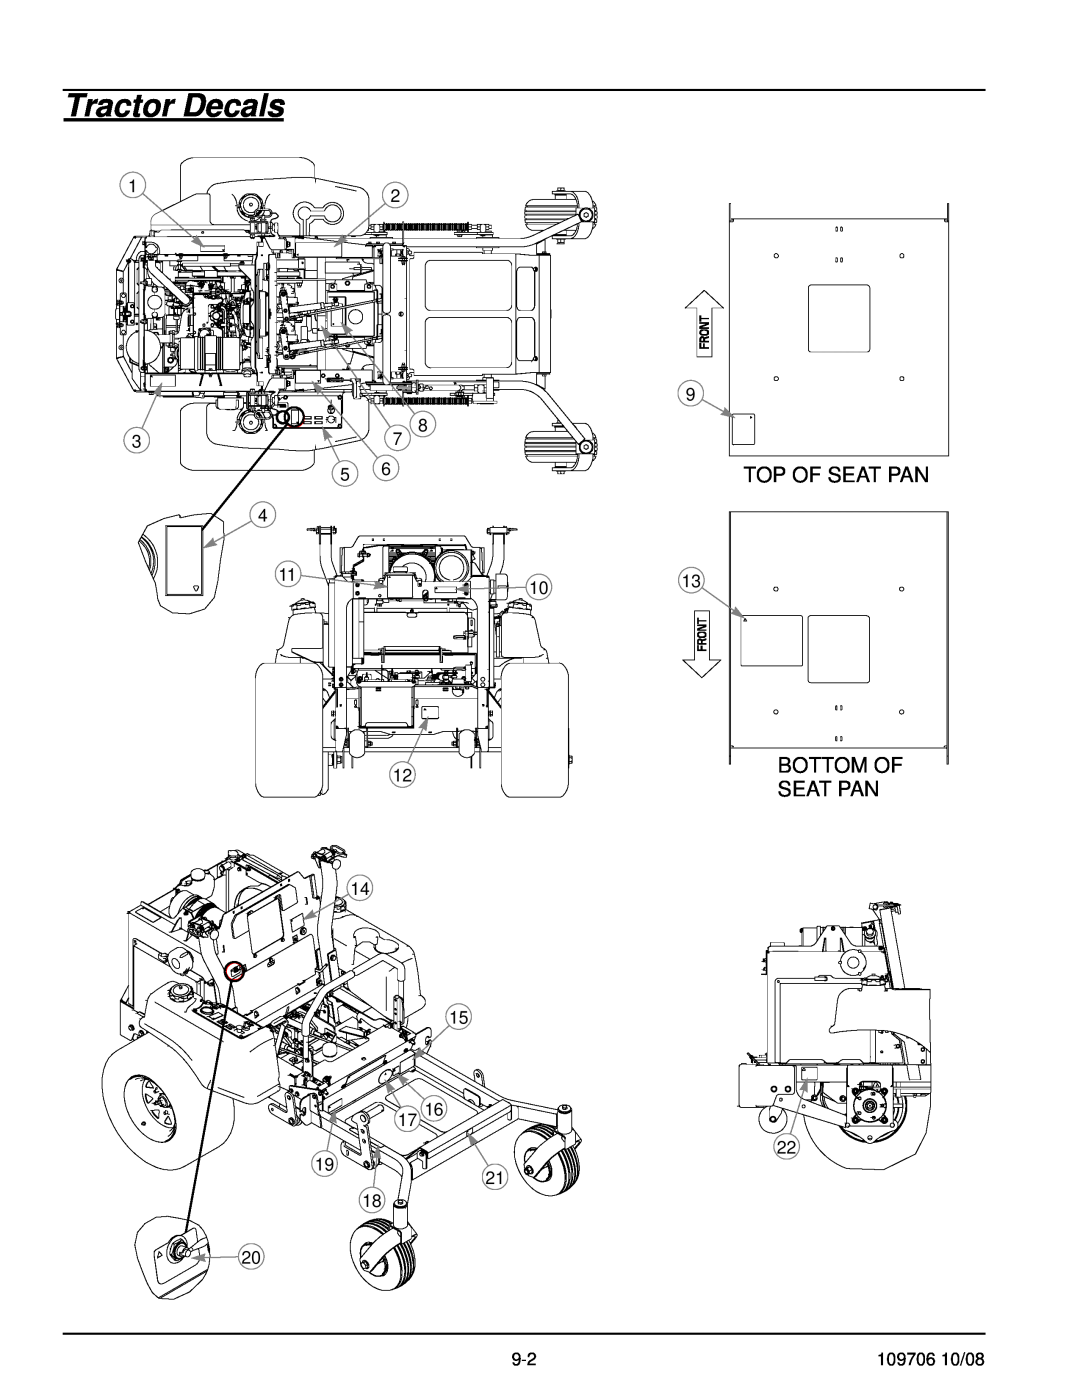 Hustler Turf Diesel Z manual Tractor Decals, Top Of Seat Pan, Bottom Of Seat Pan 